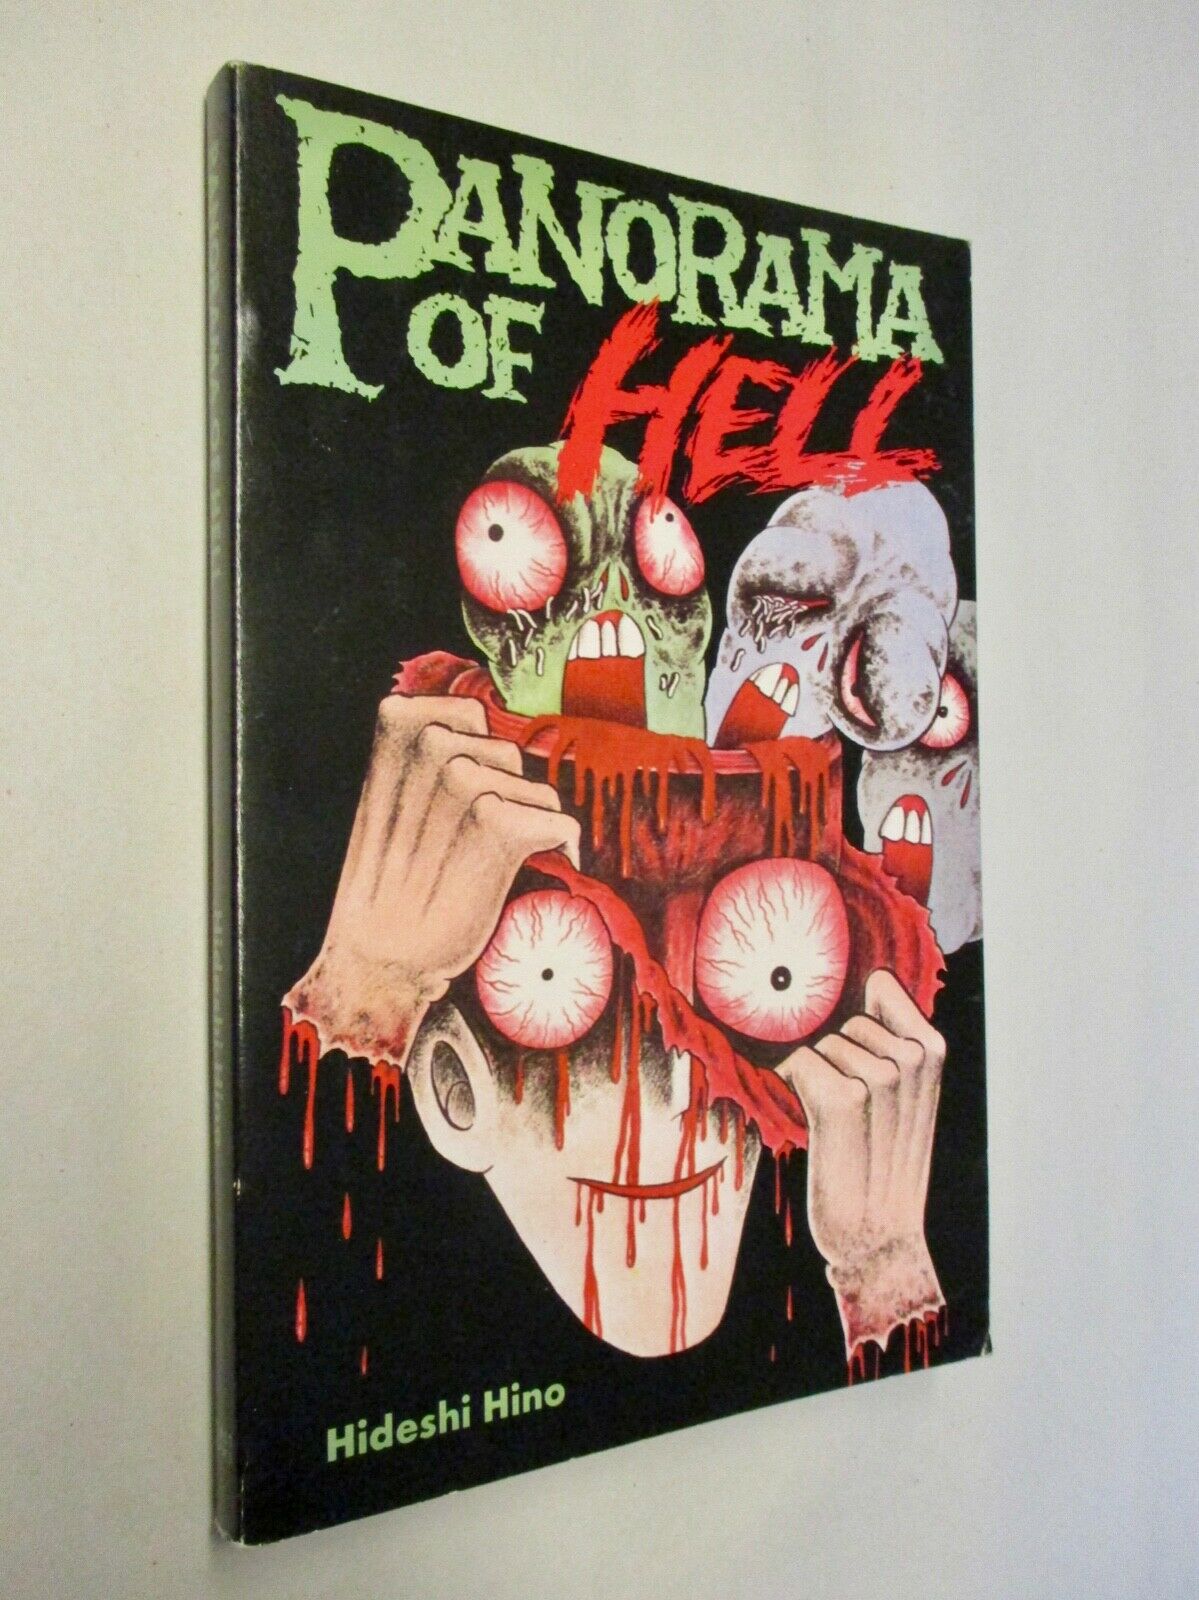 Panorma of Hell Hideshi Hino 1st Ed Pure Horror English Language Graphic Novel